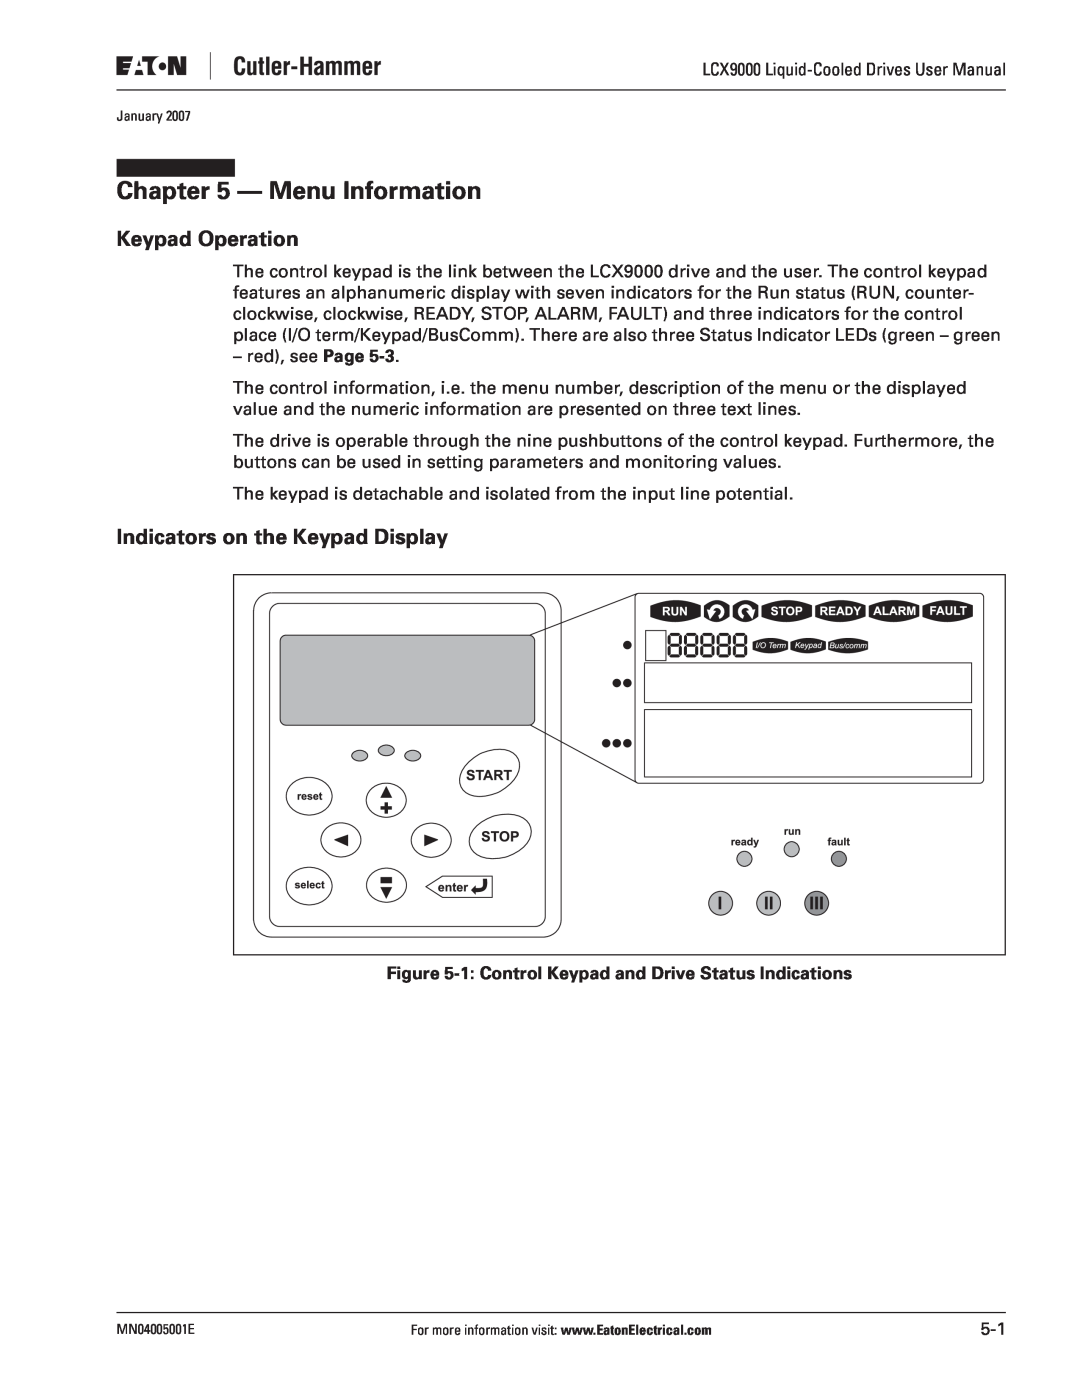 J. T. Eaton LCX9000 user manual Menu Information, Keypad Operation, Indicators on the Keypad Display 